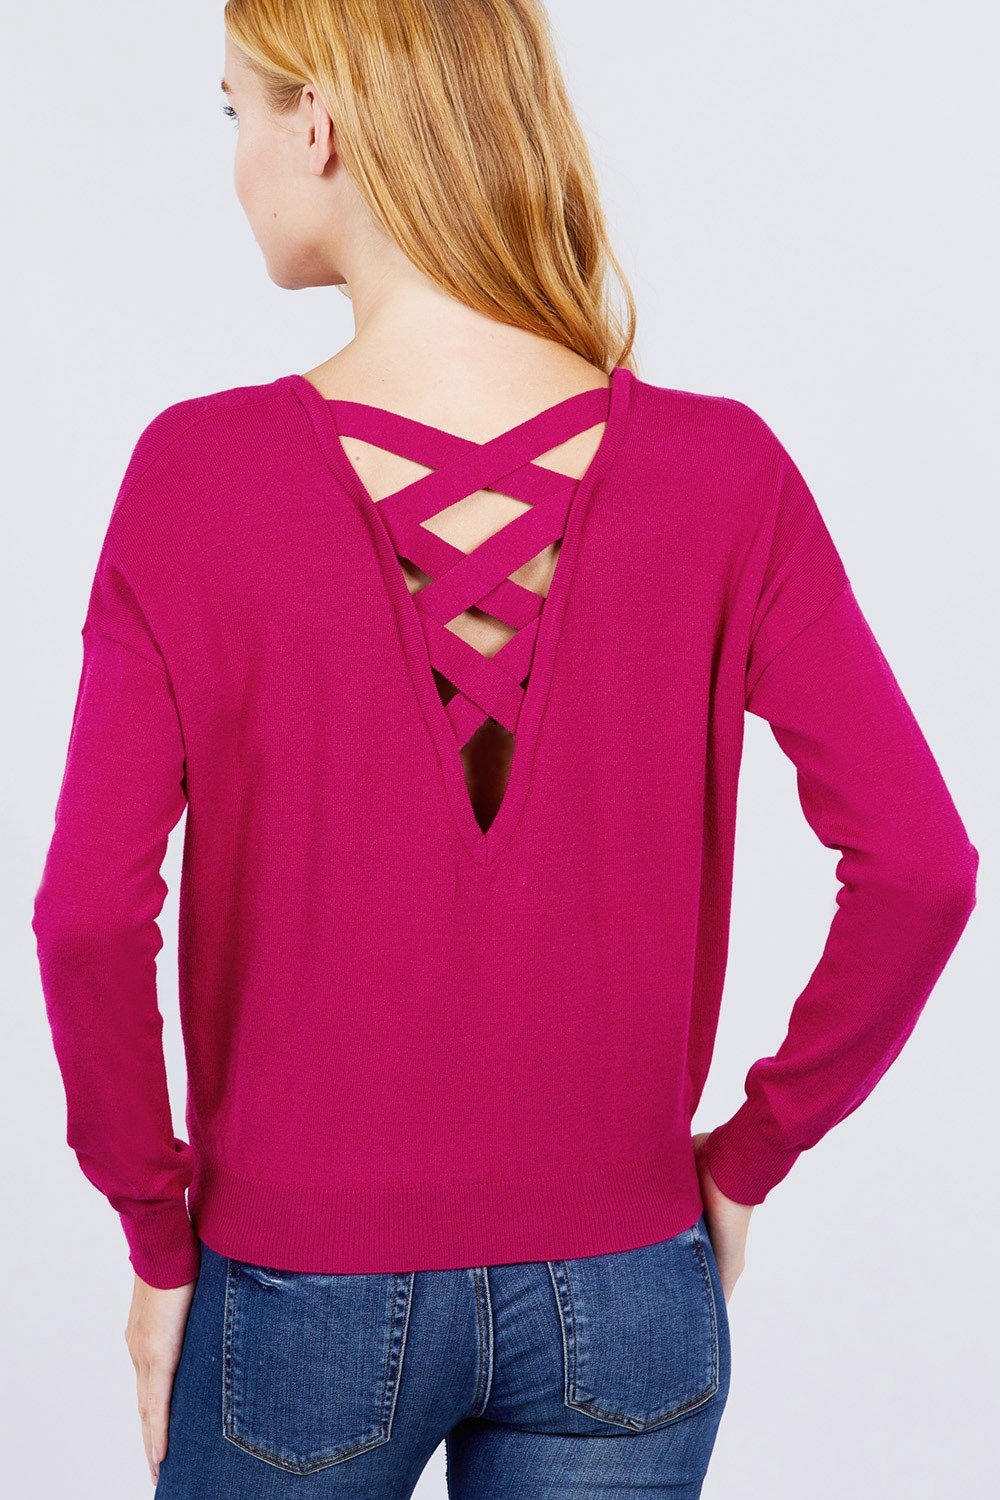 V-neck Back Cross Sweater V-neck Back Cross Sweater - M&R CORNER M&R CORNER Magenta / S